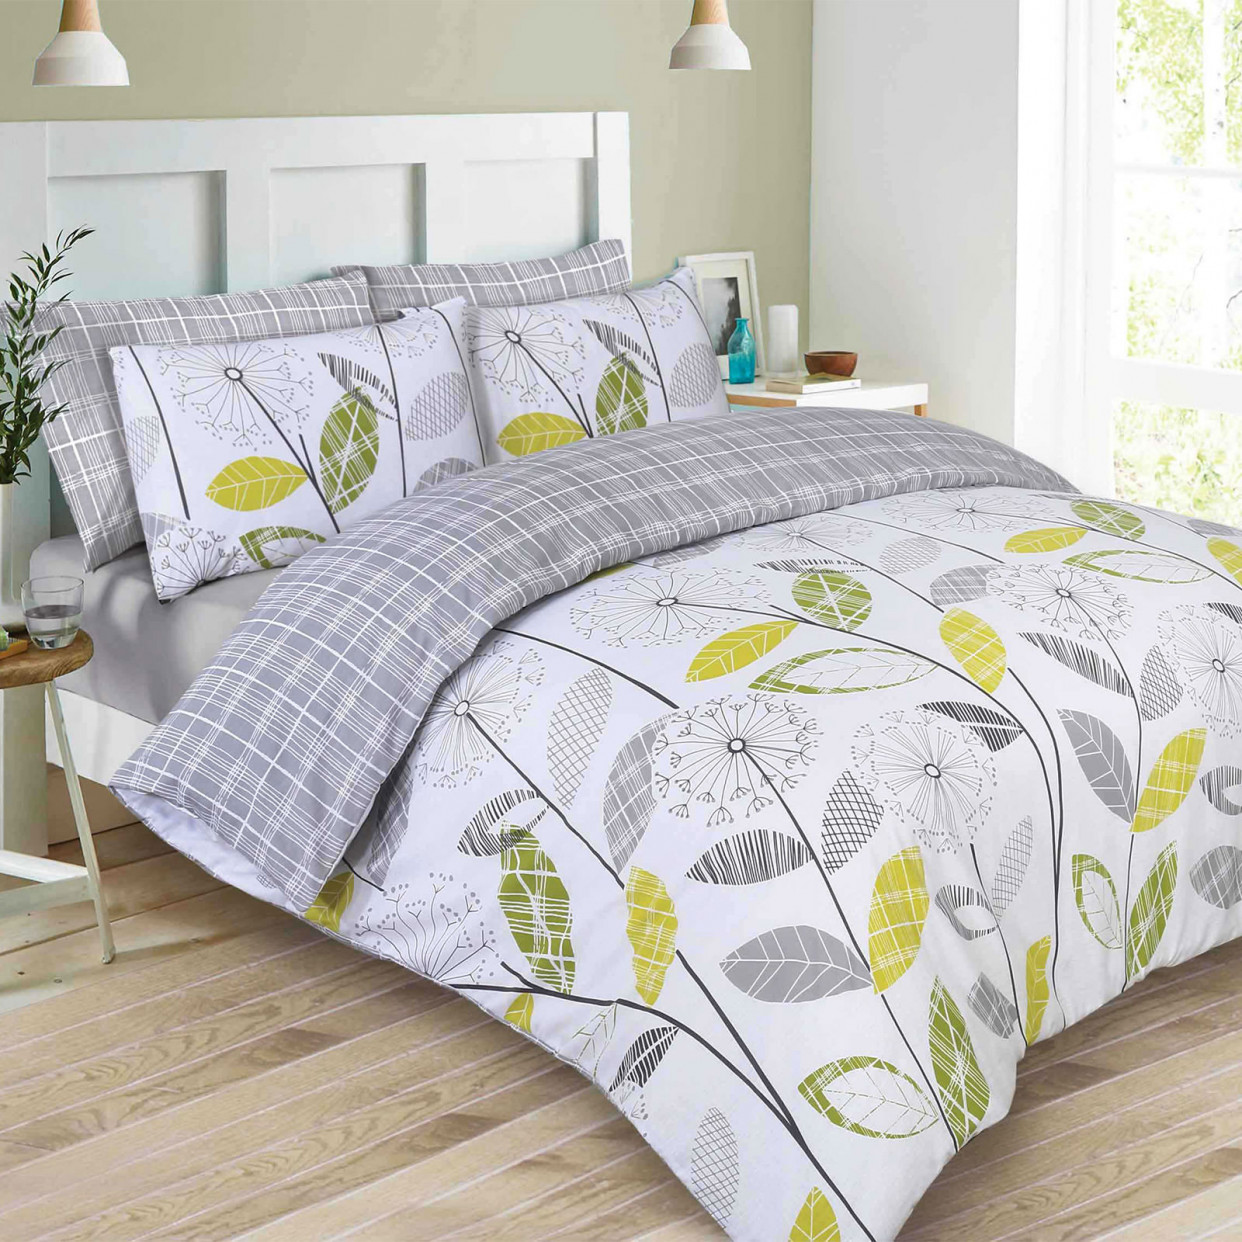 Dreamscene Allium Floral Tartan Check Bedding King Size Duvet Cover Set - Grey/White>